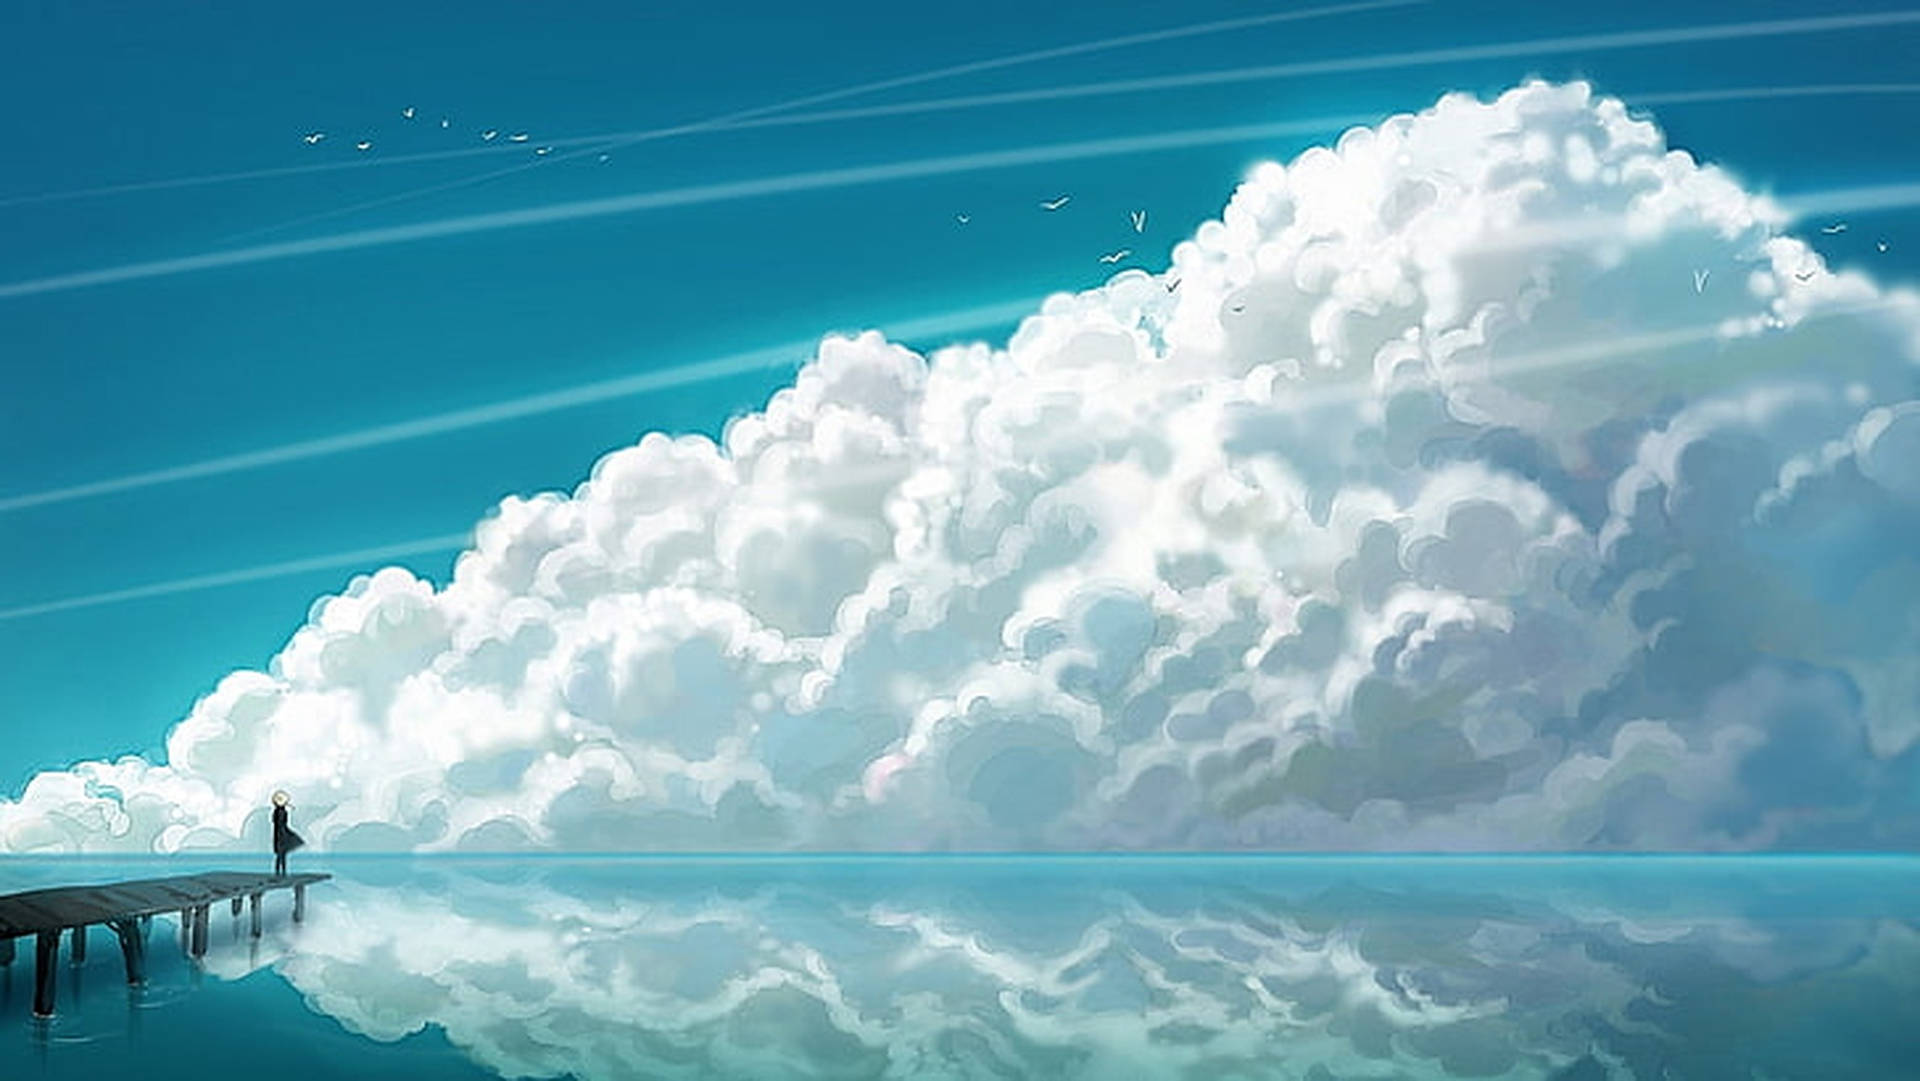 Cloudy Weather Digital Illustration Wallpaper